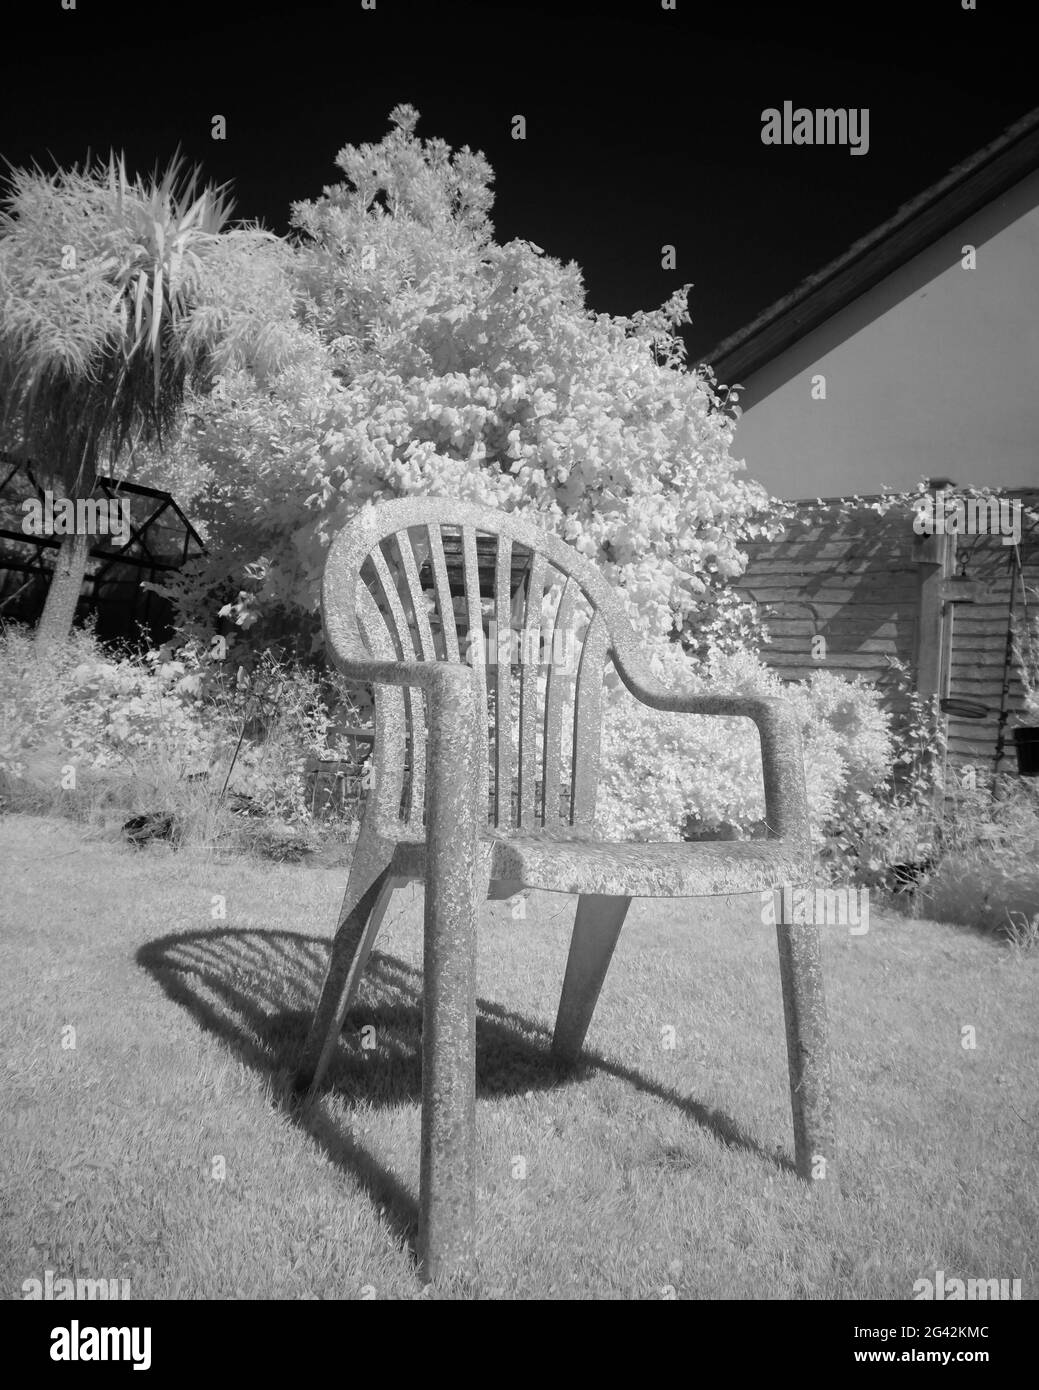 June 2021 - An old garden plastic chair taken on infrared Stock Photo